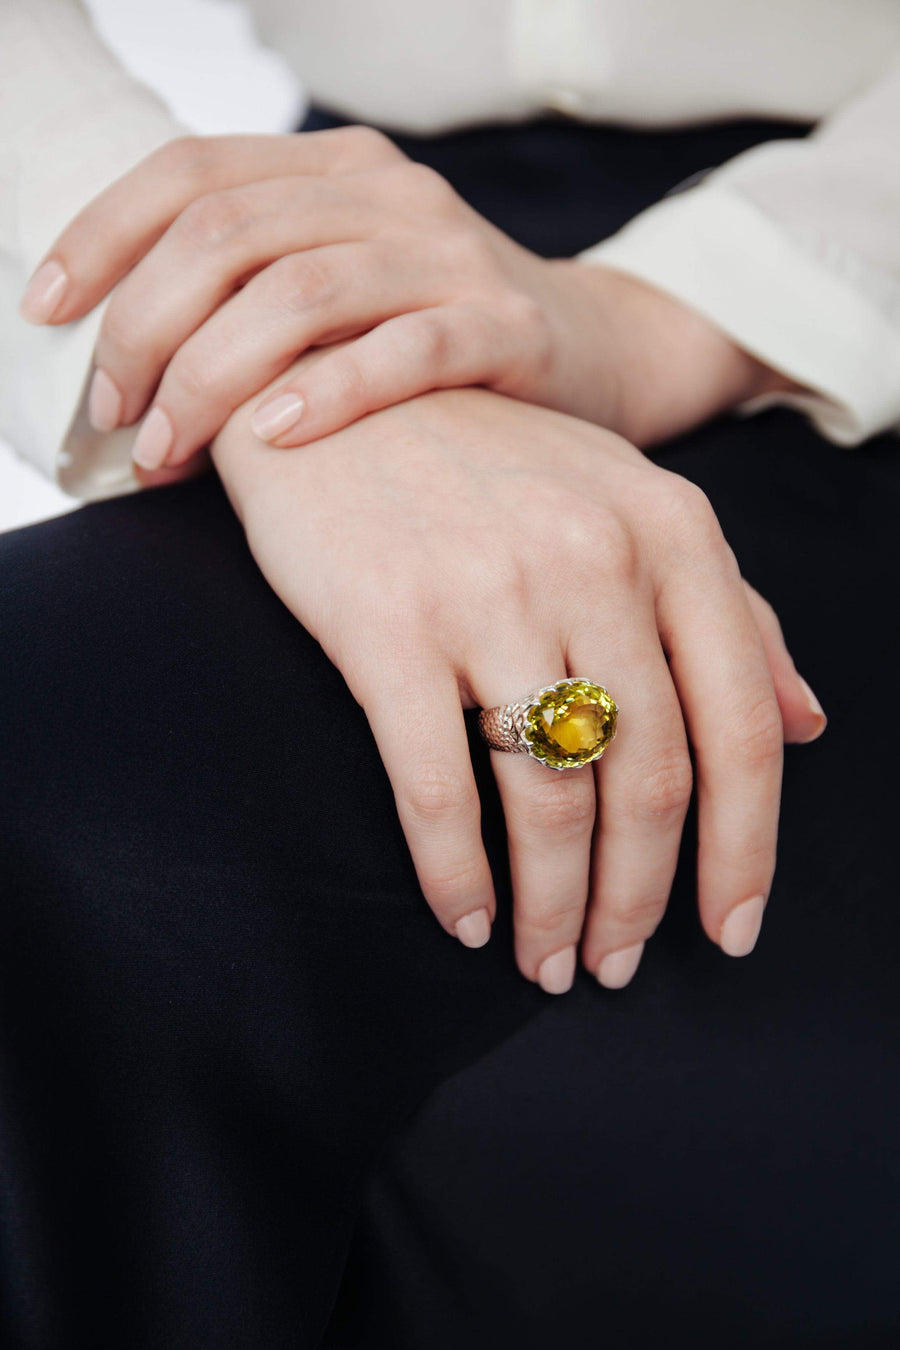 Lemon Topaz Ring - Inaya Jewelry